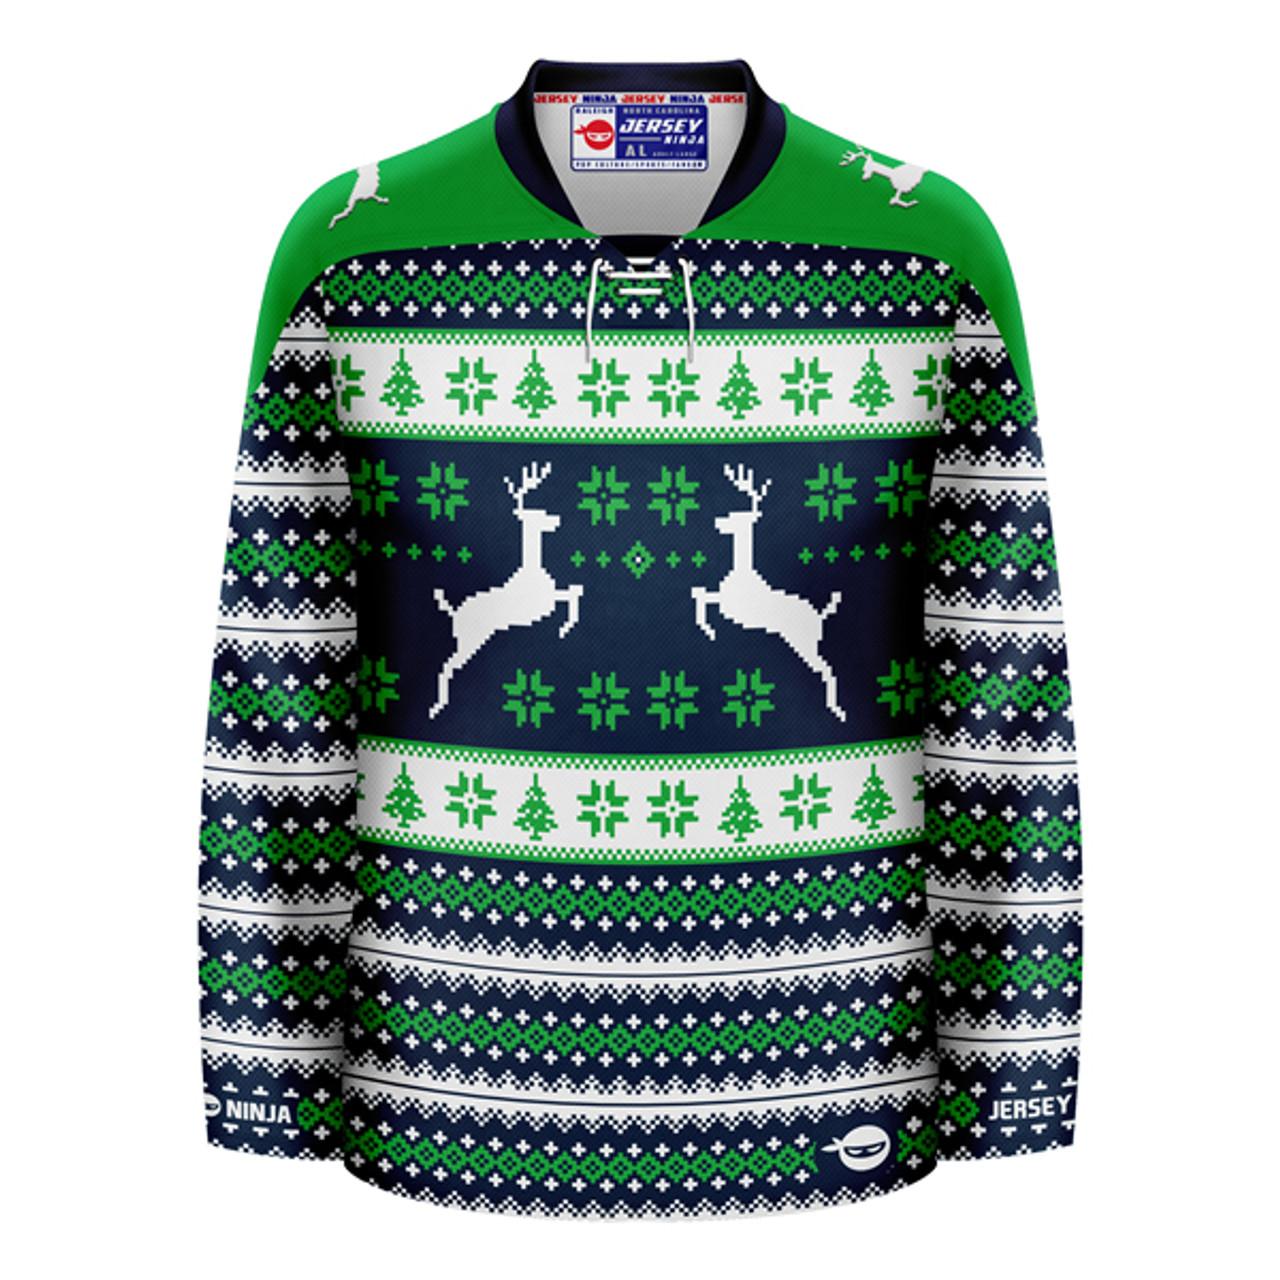 Jersey Ninja - Canada Day Abstract Leafs Ugly Sweater Holiday Hockey Jersey